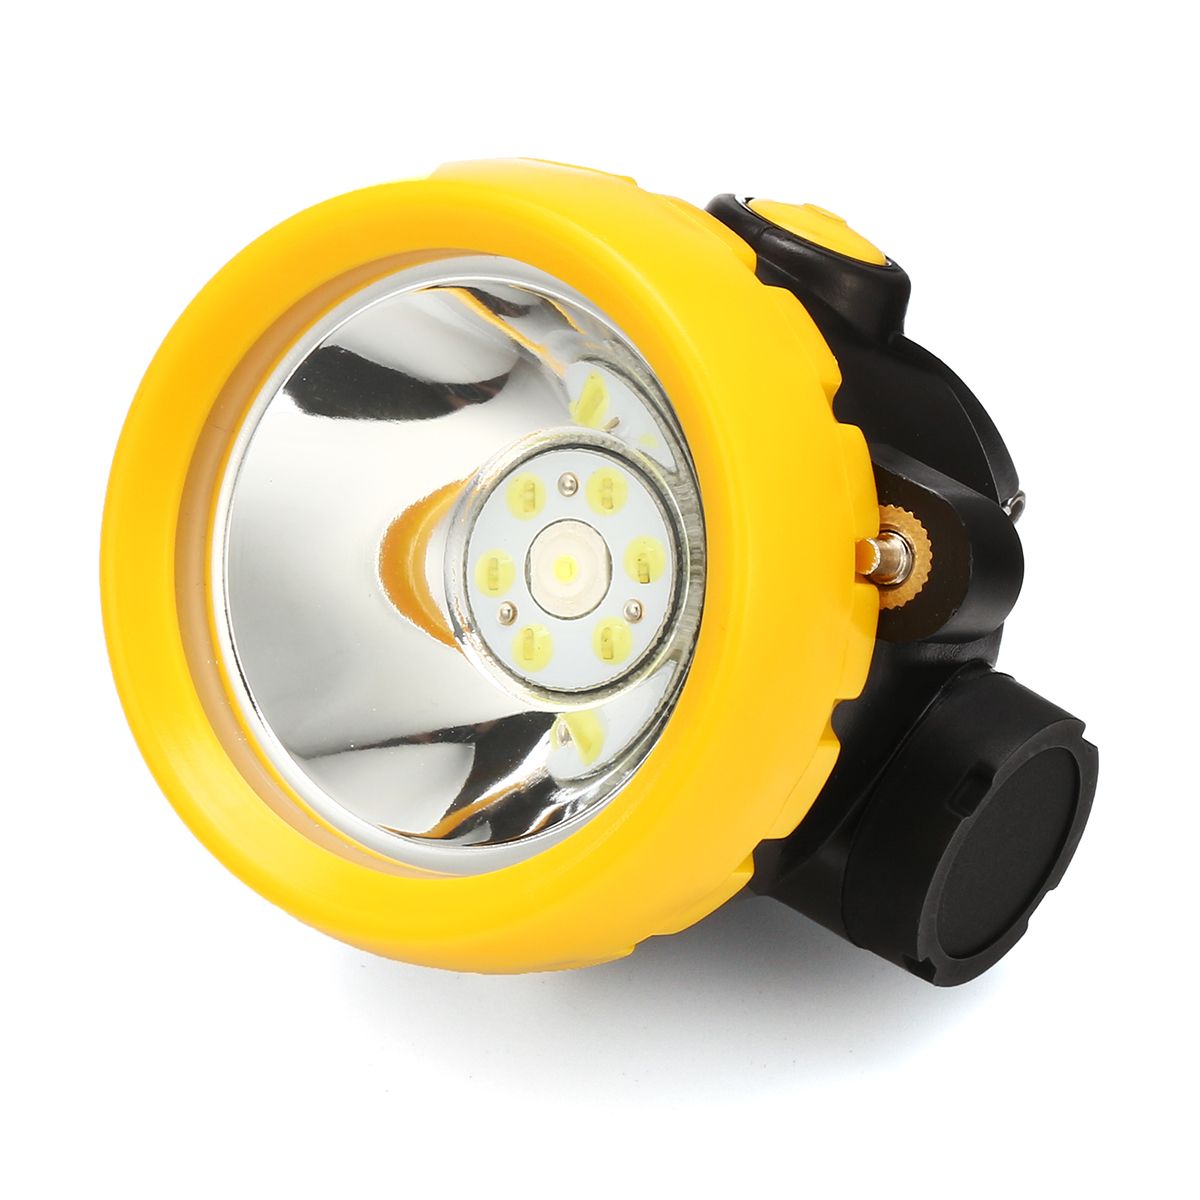 1W-3500L-Miner-Head-Cordless-Torch-Lamp-Light-LED-Helmet-Safety-Power-Miner-LED-Search-Light-1458401